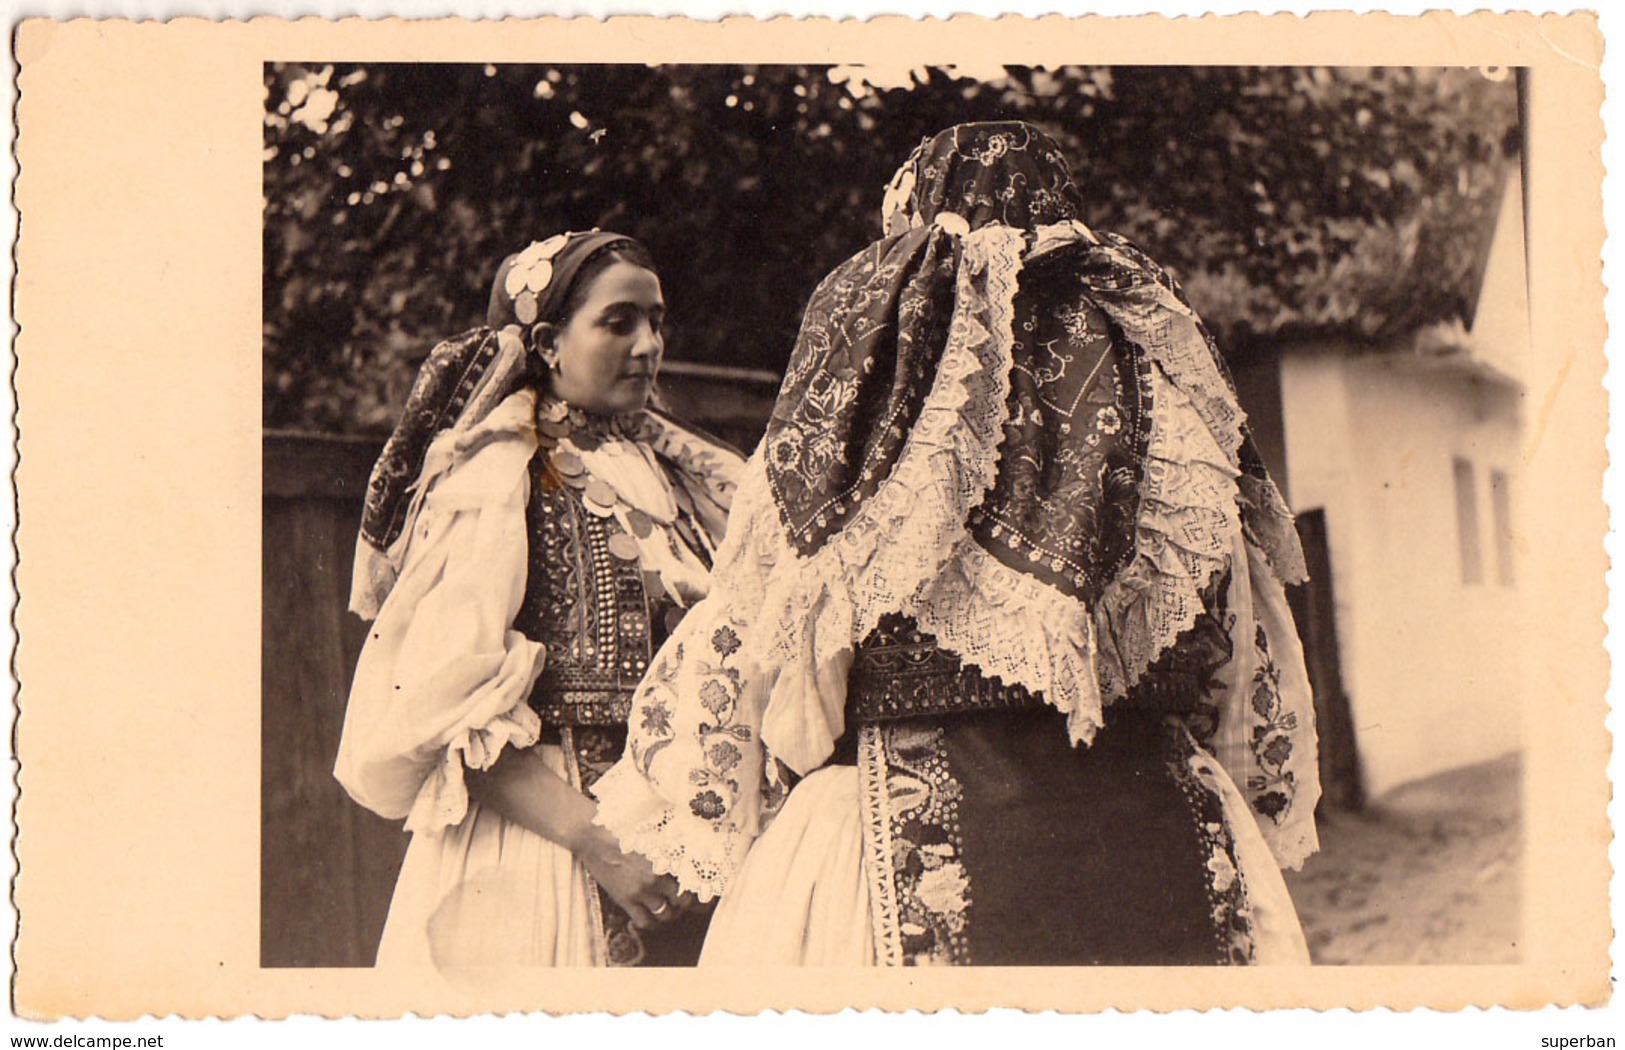 BANAT - COMUNA SECUSIGIU - ARAD : TYPES DU VILLAGE / COSTUMES - CARTE VRAIE PHOTO / REAL PHOTO POSTCARD ~ 1930 (ad419) - Romania